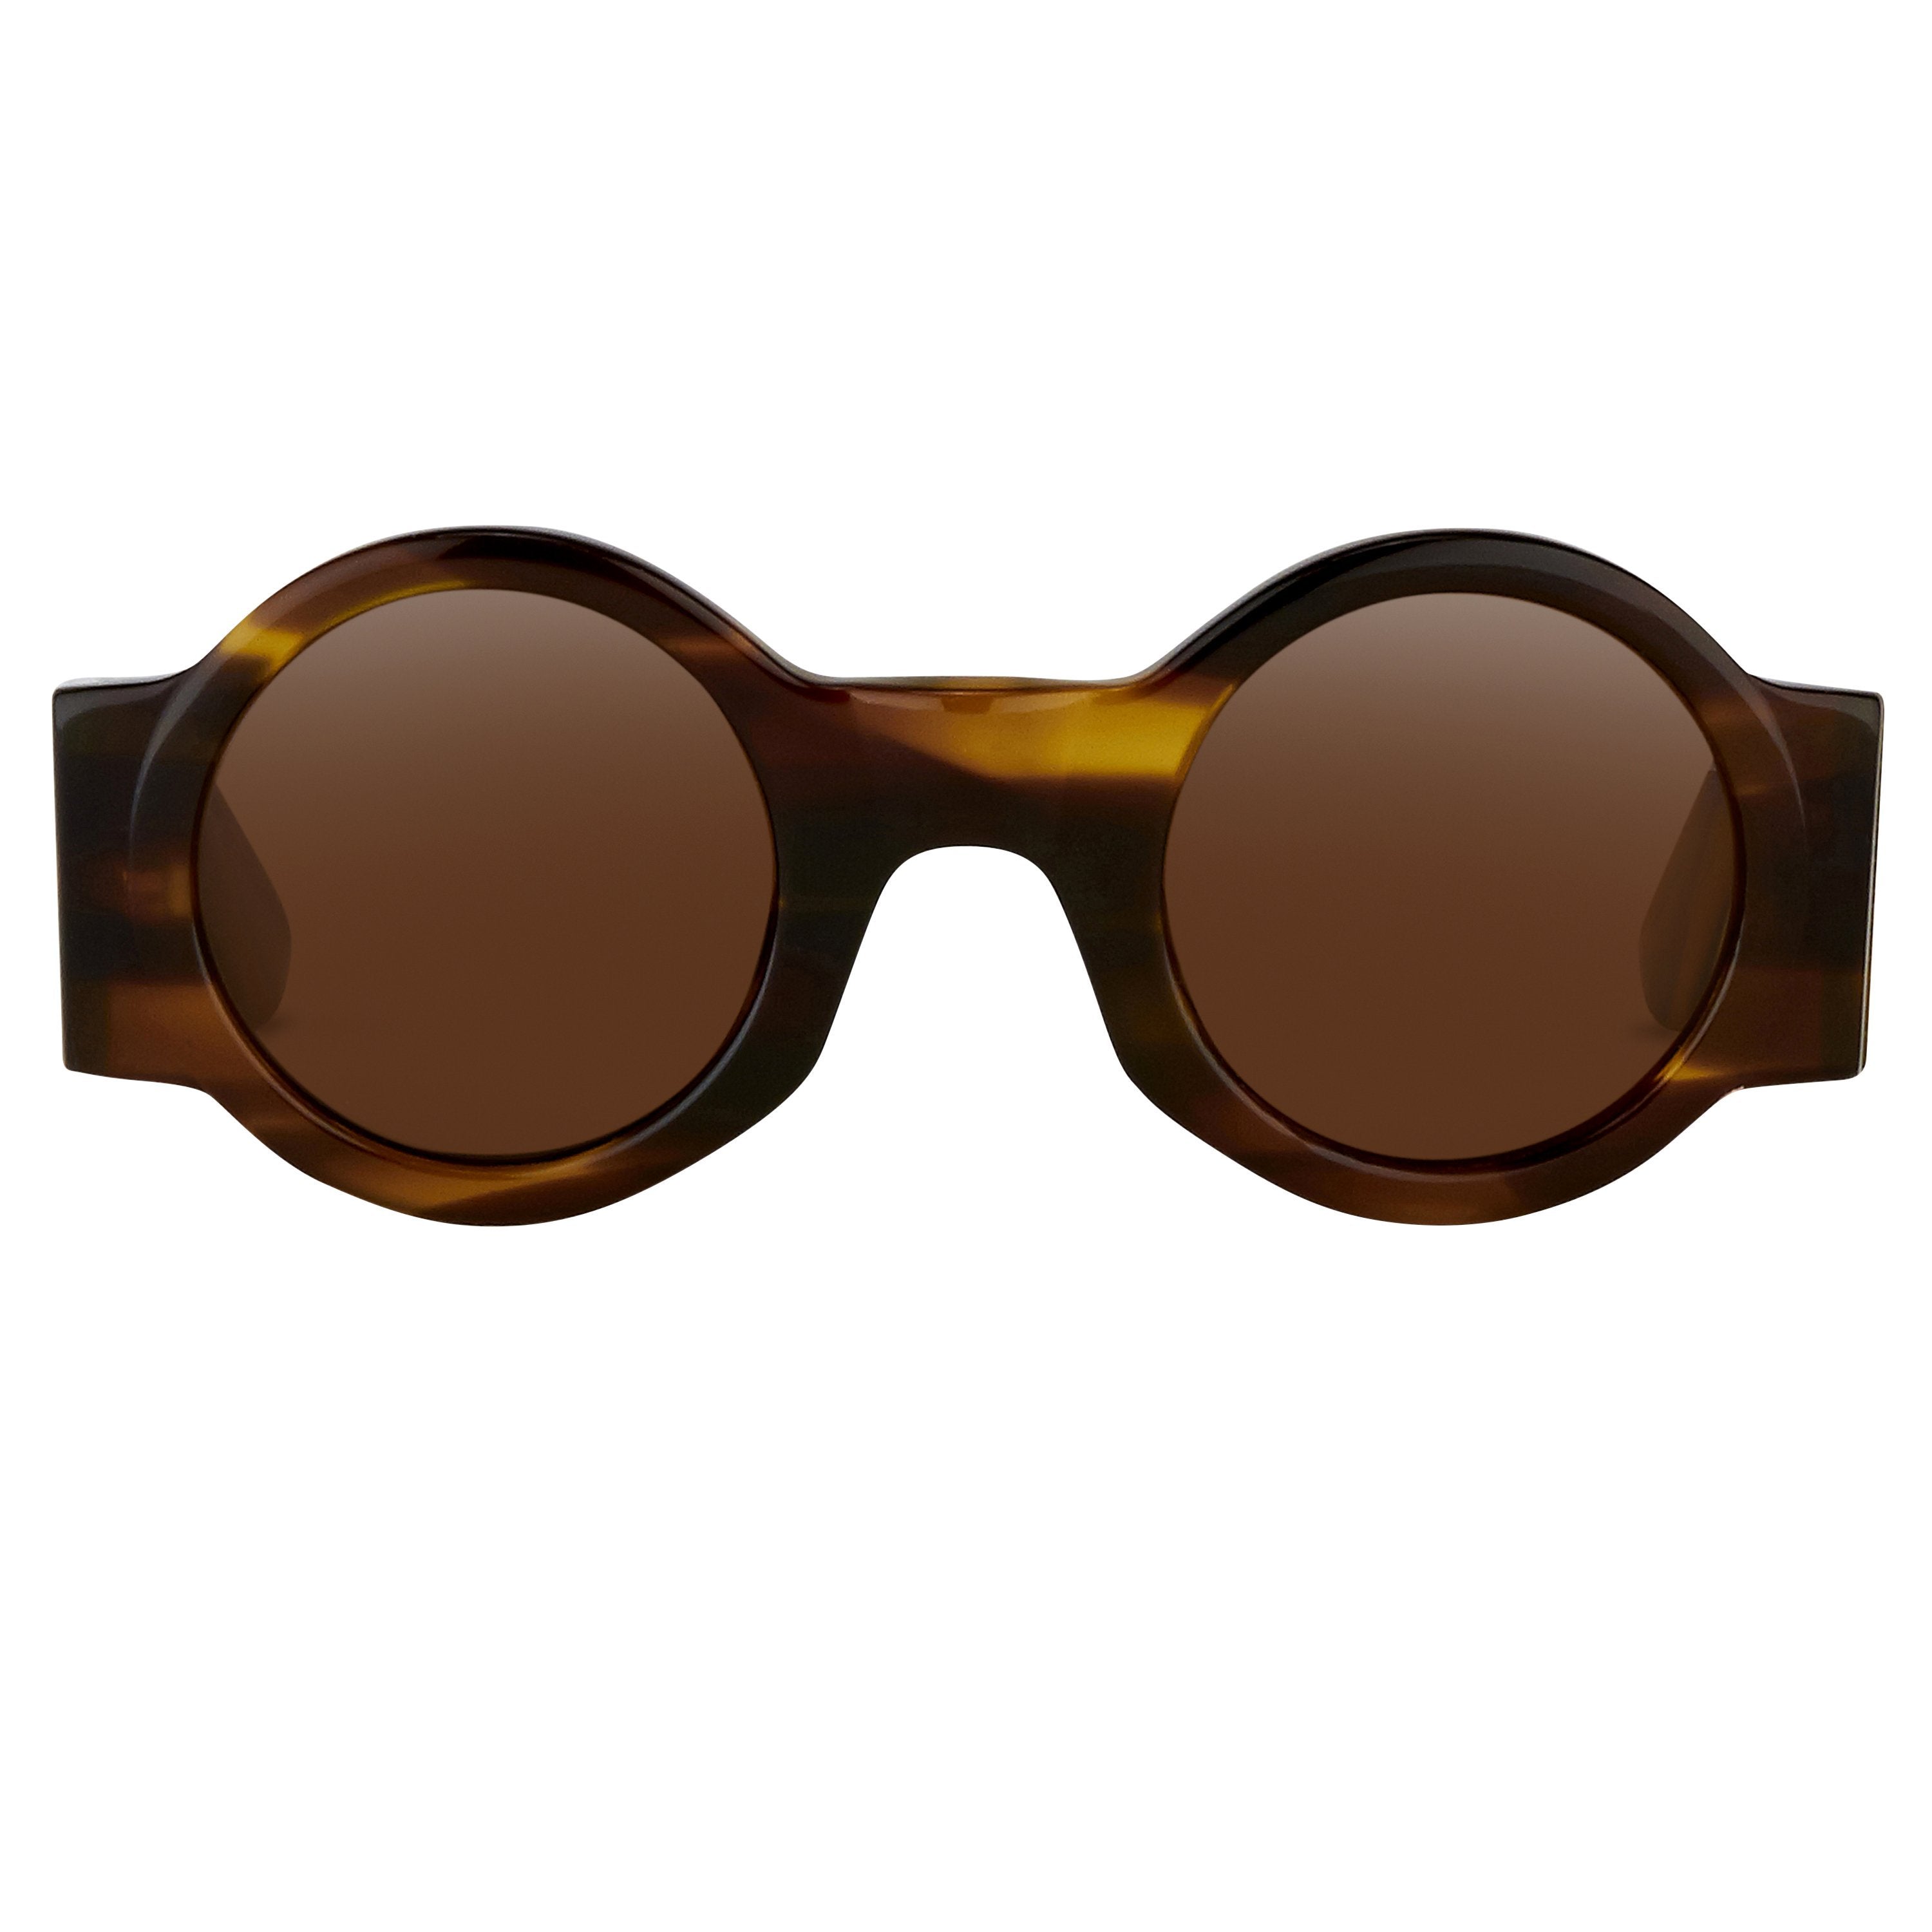 Color_DVN98C9SUN - Dries van Noten 98 C9 Round Sunglasses